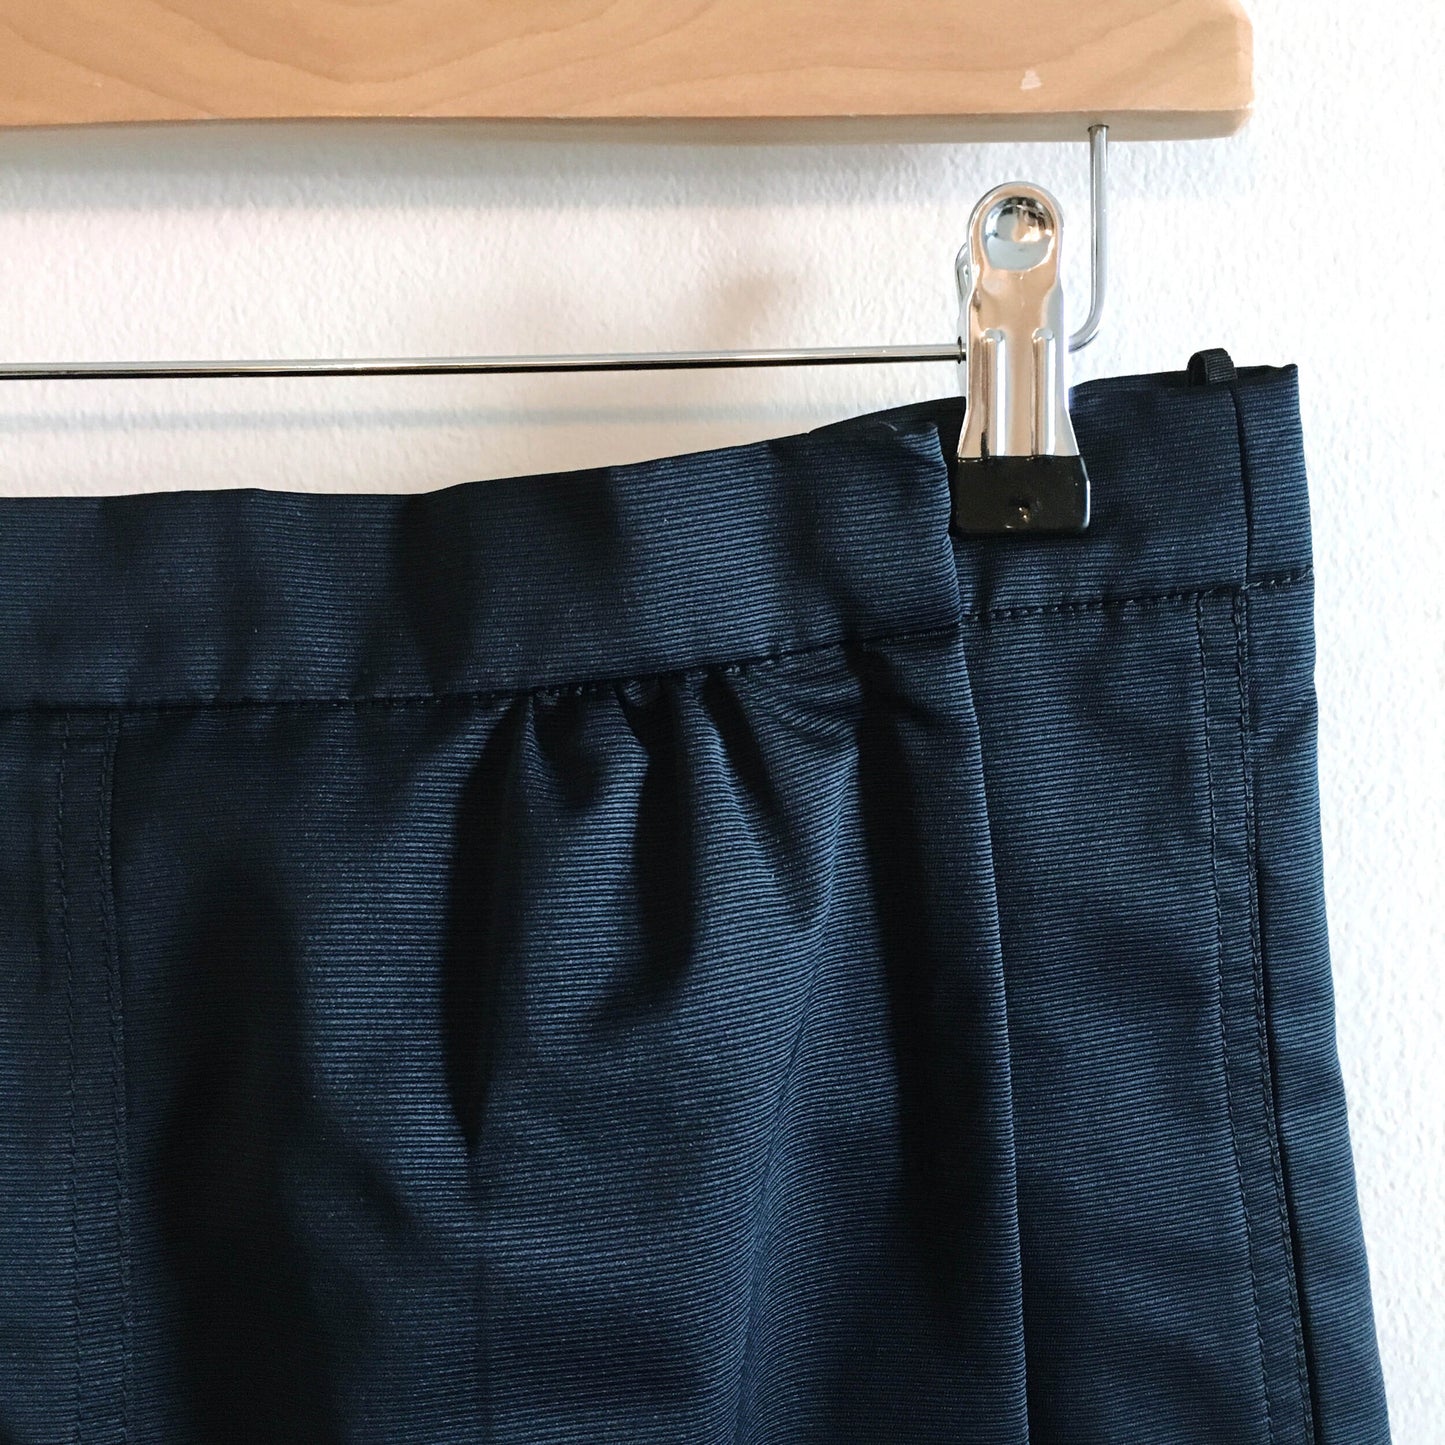 nina ricci mini skirt with chiffon hem - size 38